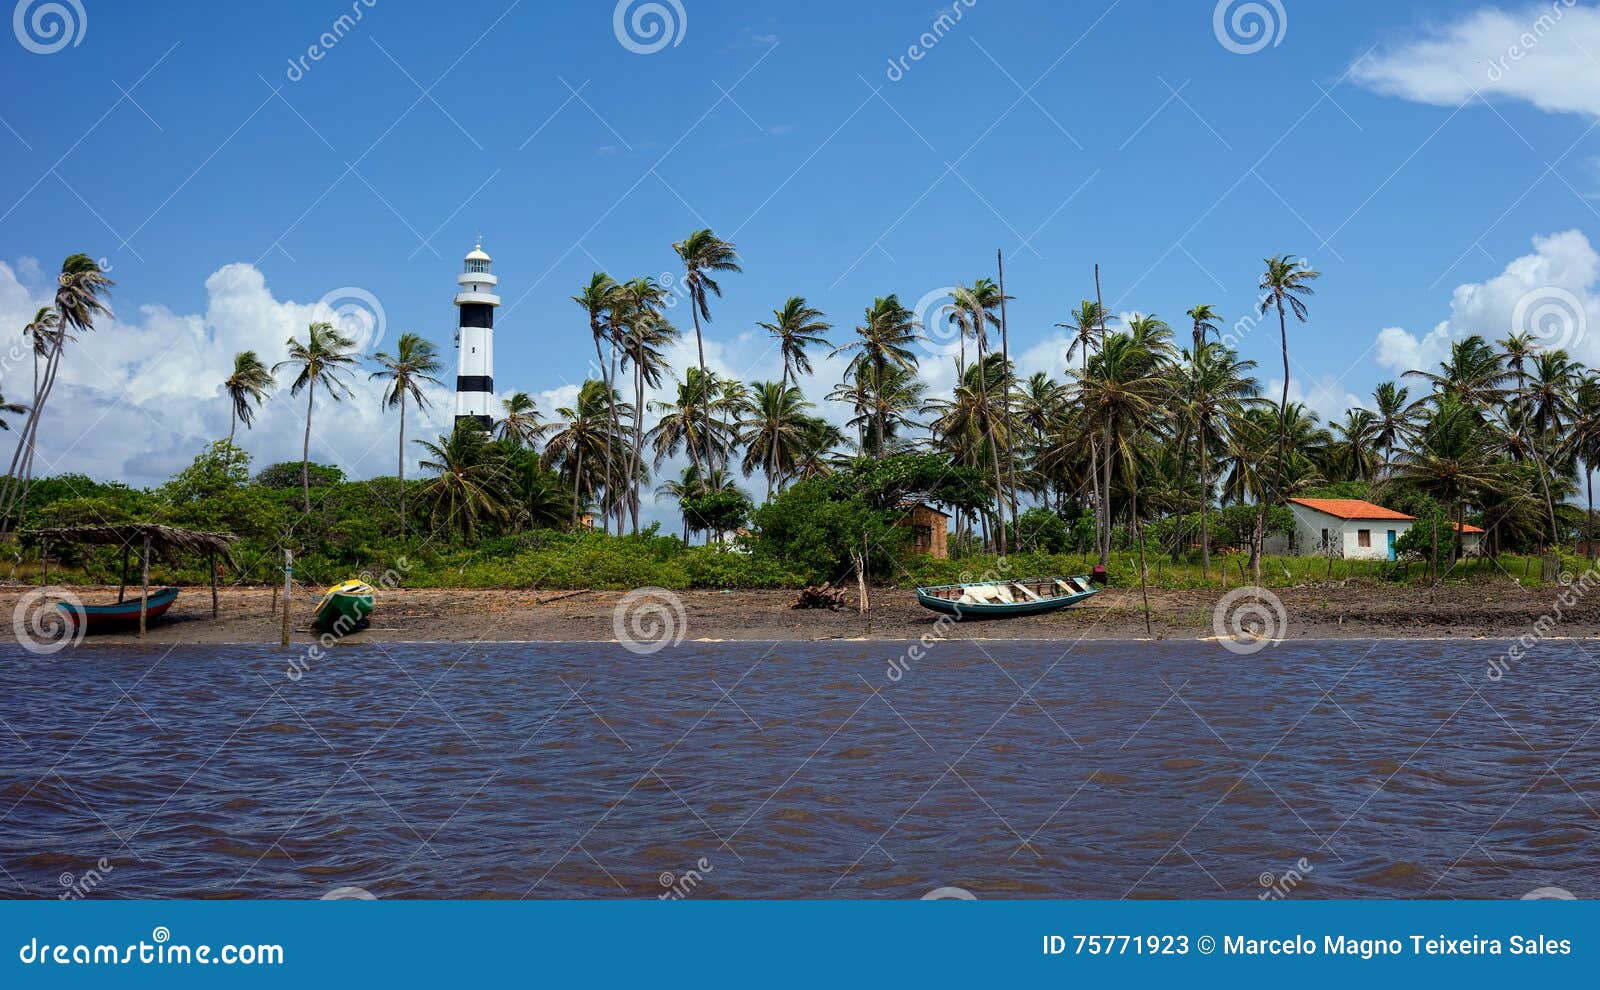 lighthouse in mandacaru, lenÃÂ§ois maranhenses national park, maranhao, brazil